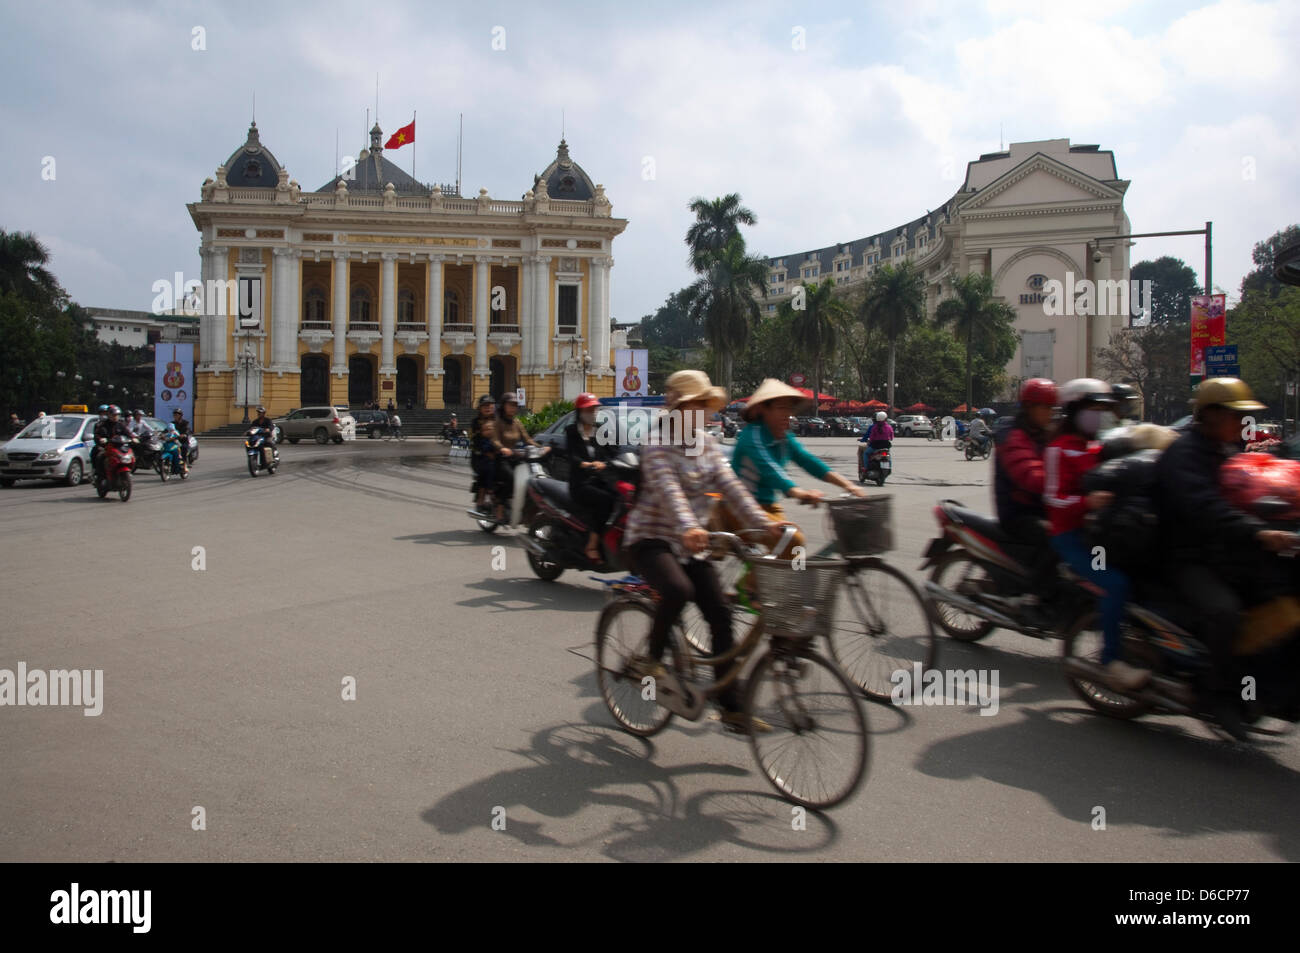 Horizontal wide angle of Hanoi Opera House, Nhà hát lớn Hà Nội, in central Hanoi. Stock Photo